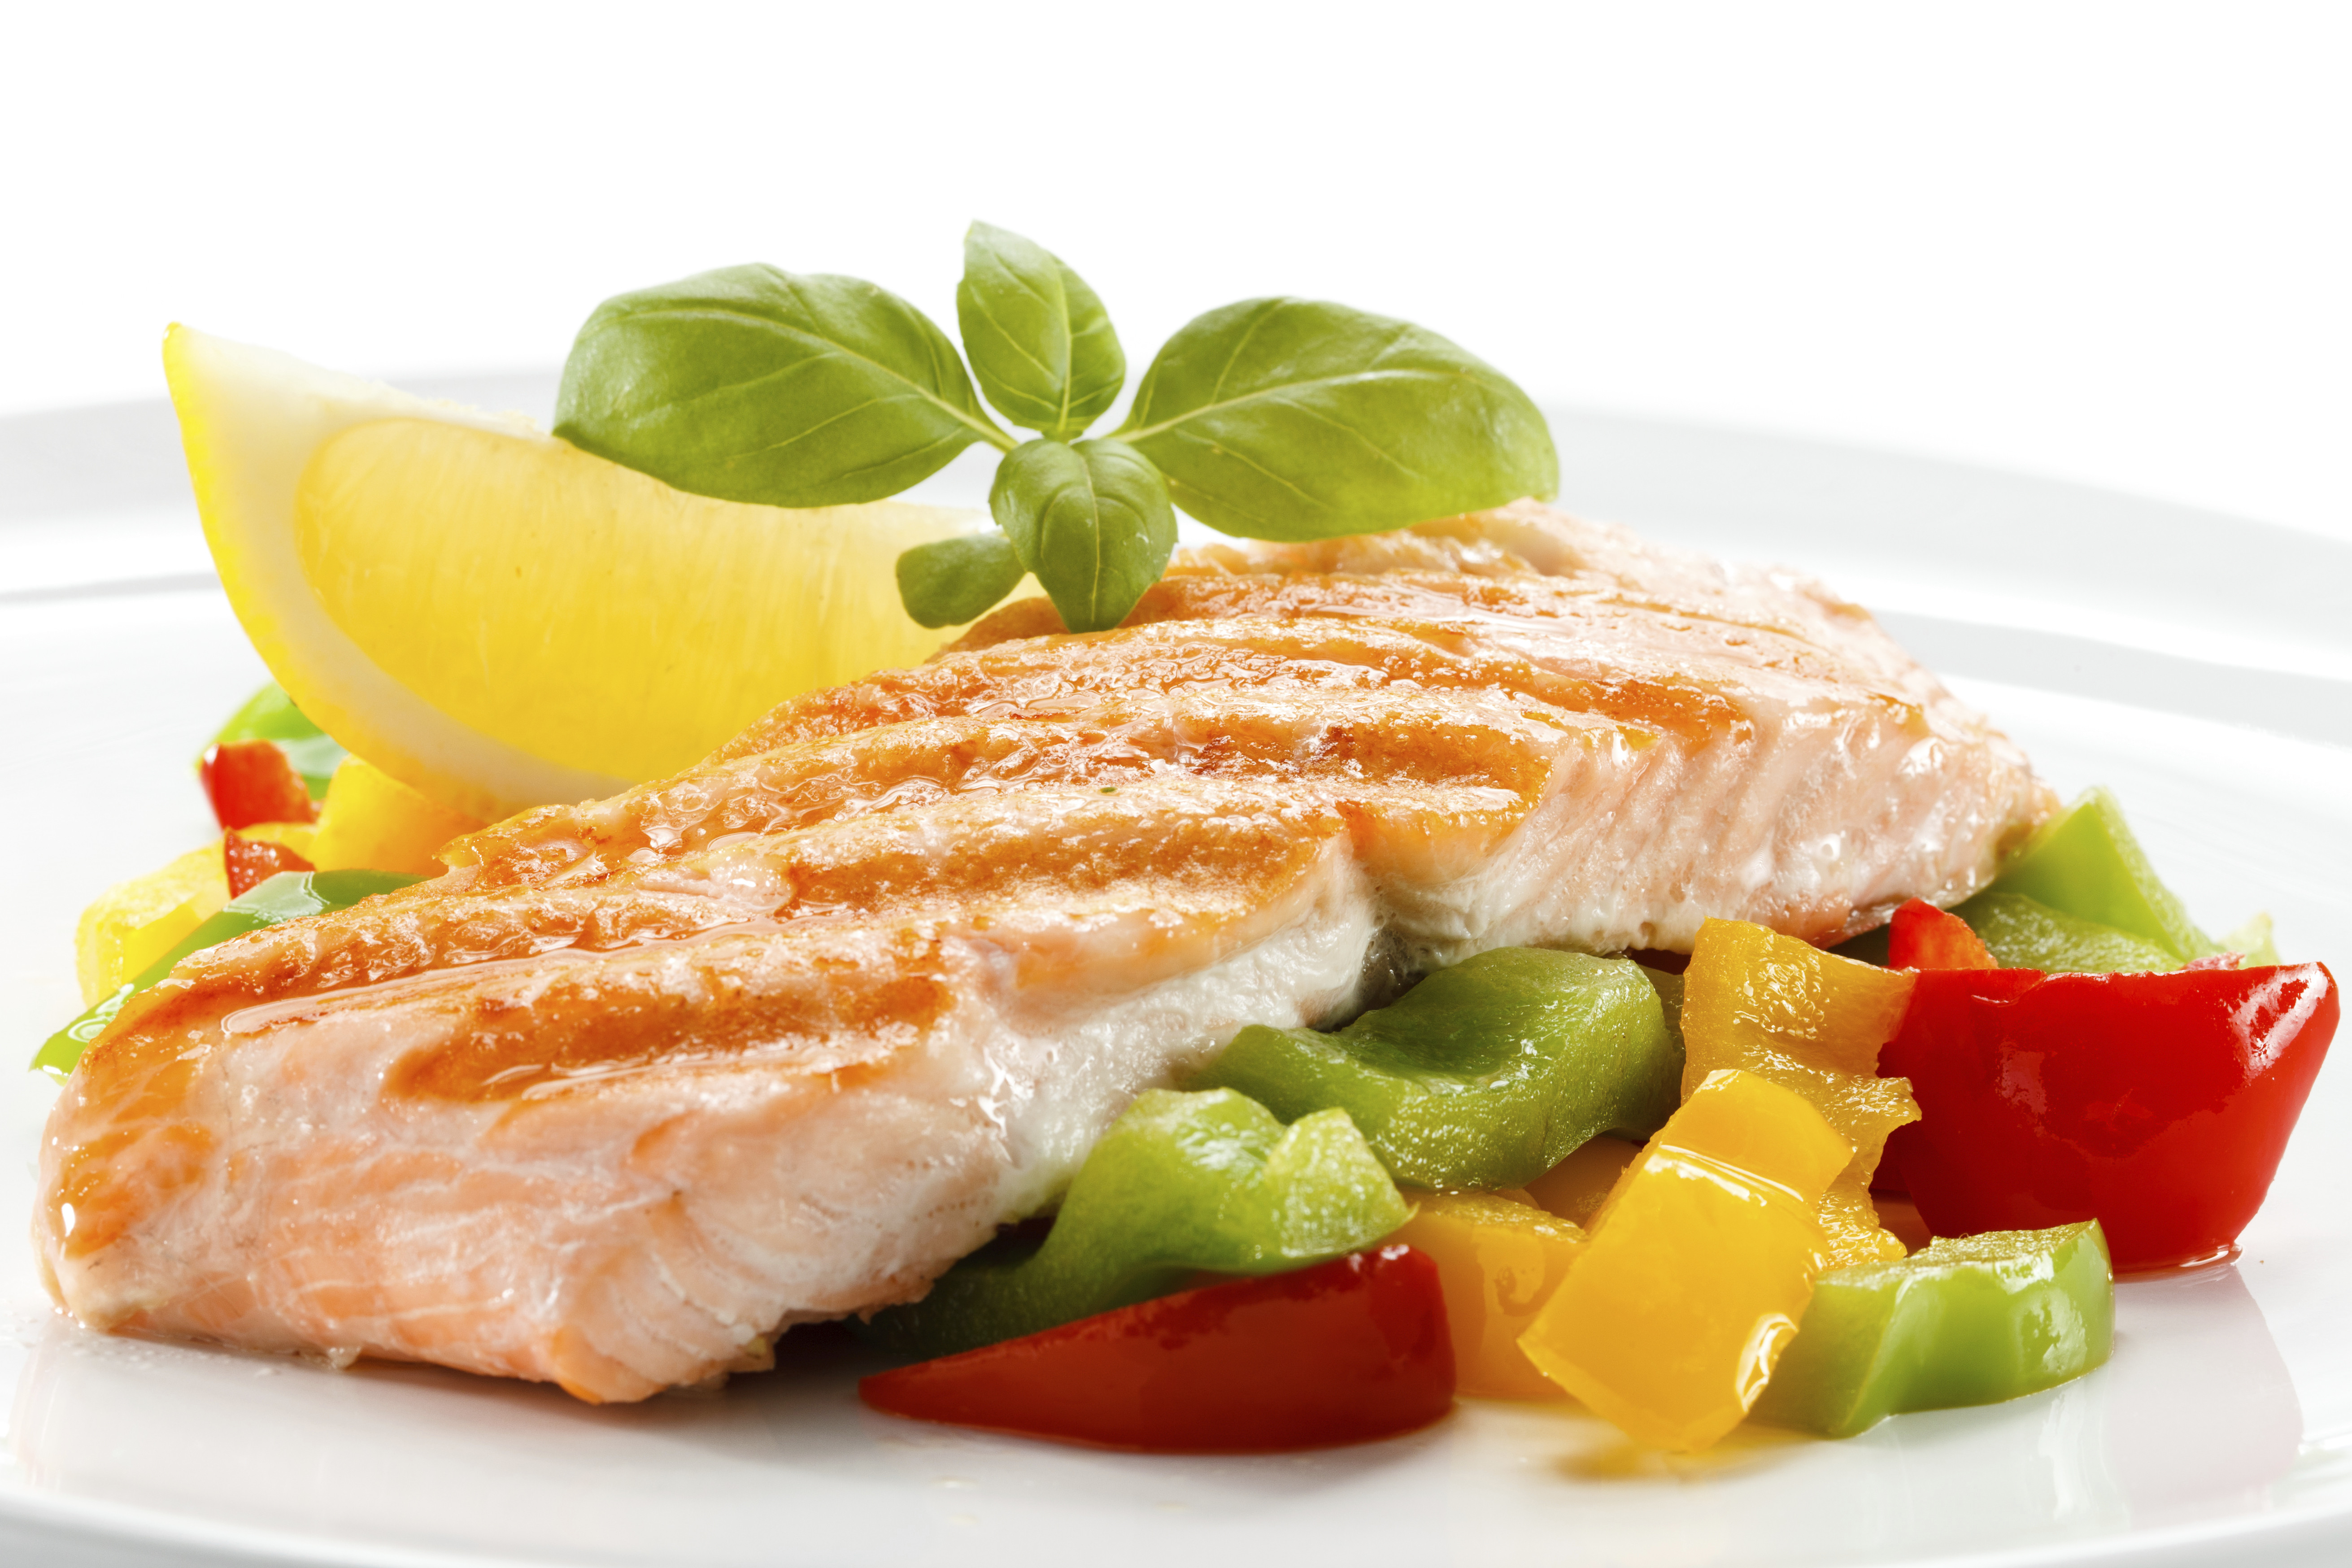 Heart Healthy Salmon Recipes
 A cardiologist’s heart healthy salmon recipe